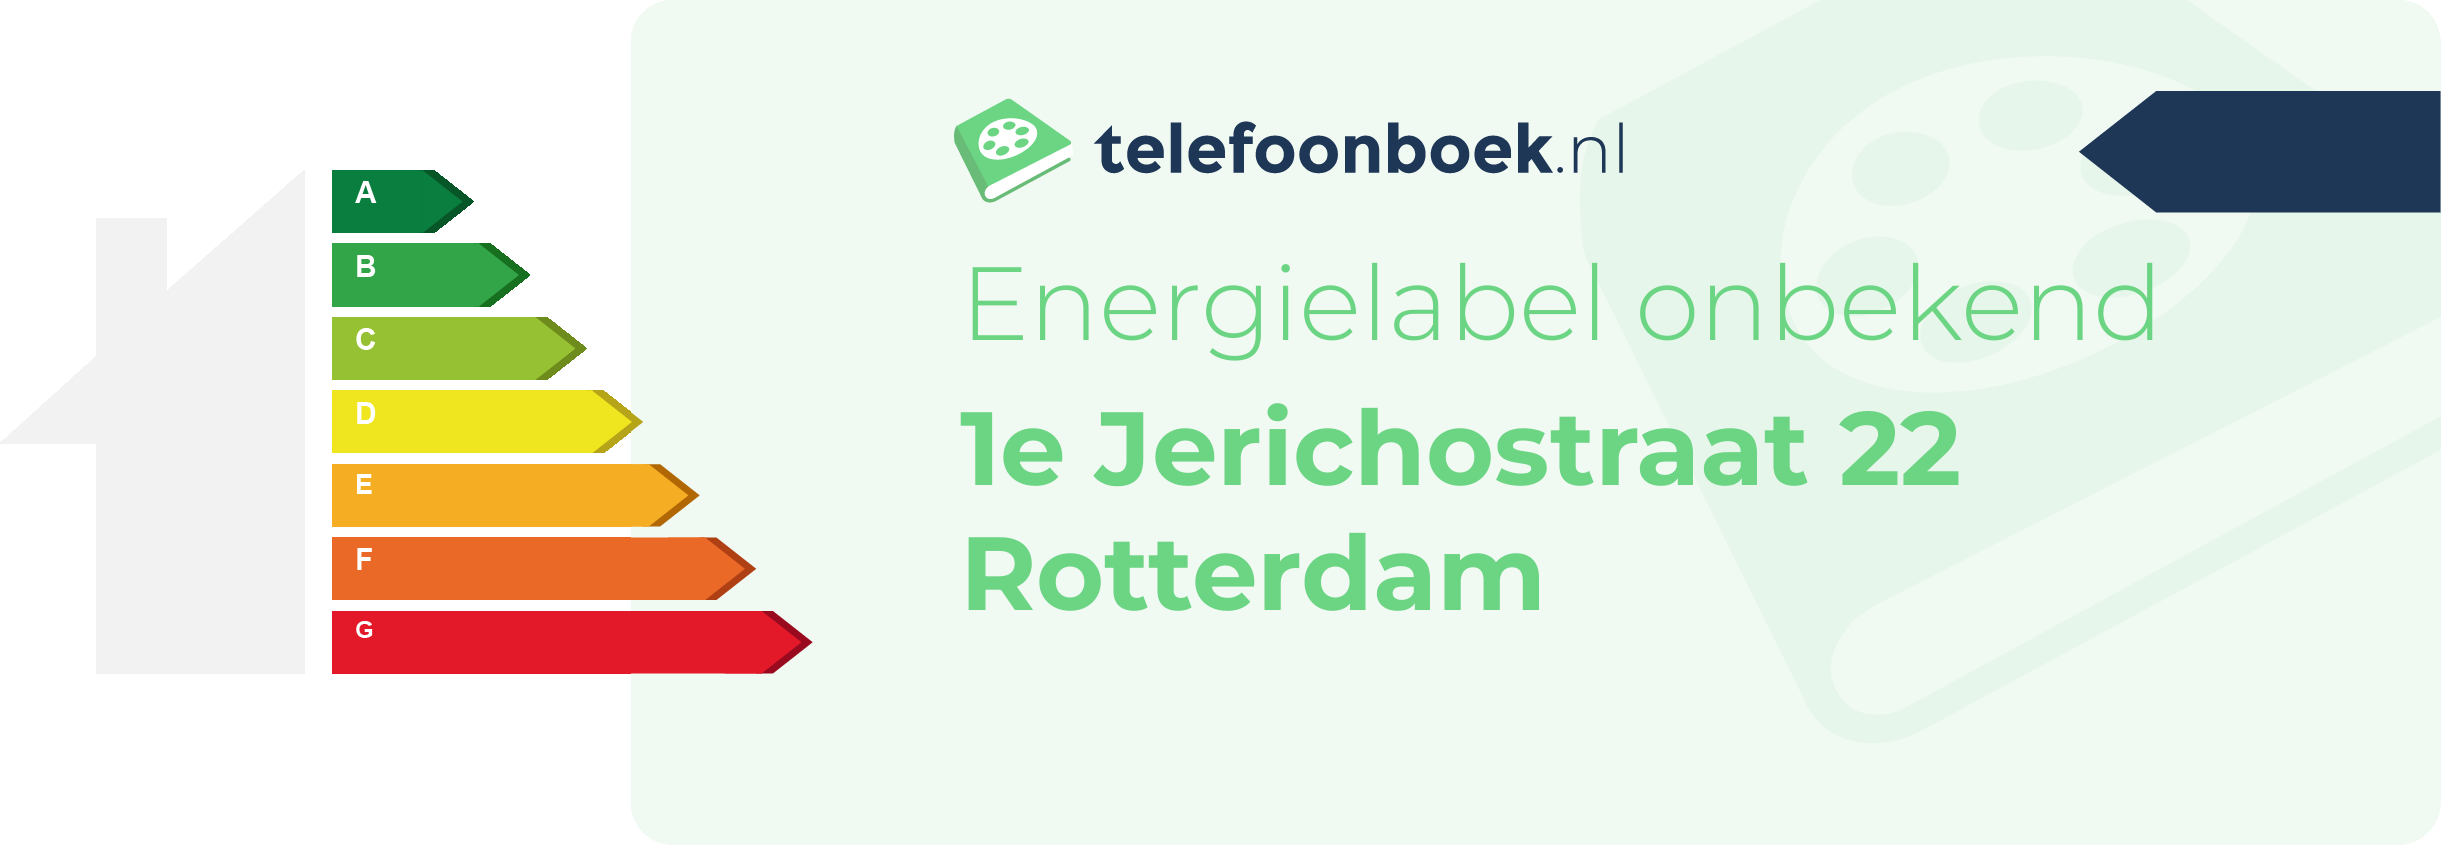 Energielabel 1e Jerichostraat 22 Rotterdam